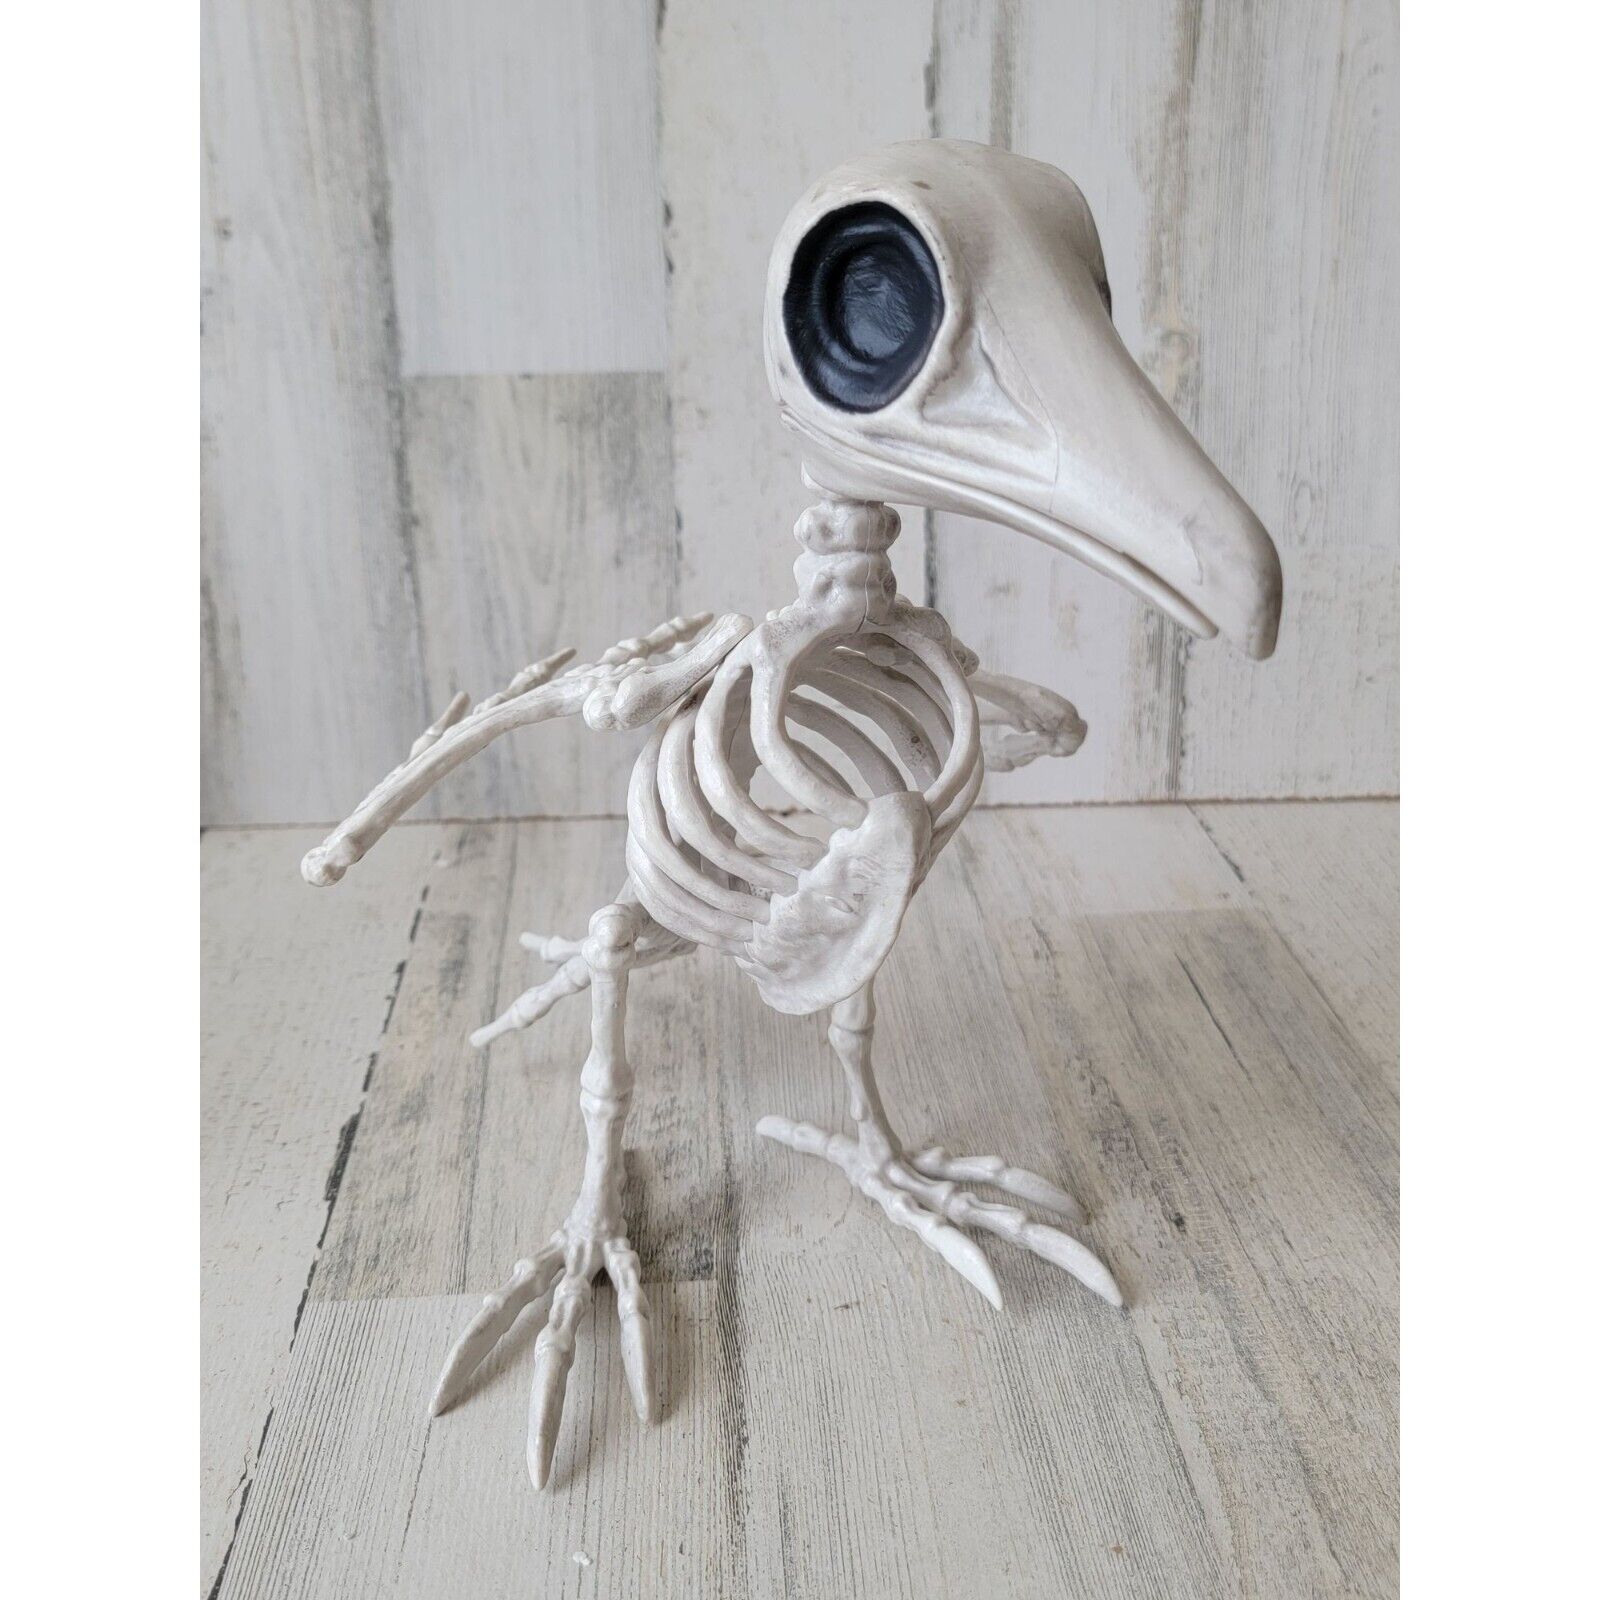 Crazy bonez skeleton bird dodo crow Halloween prop decor